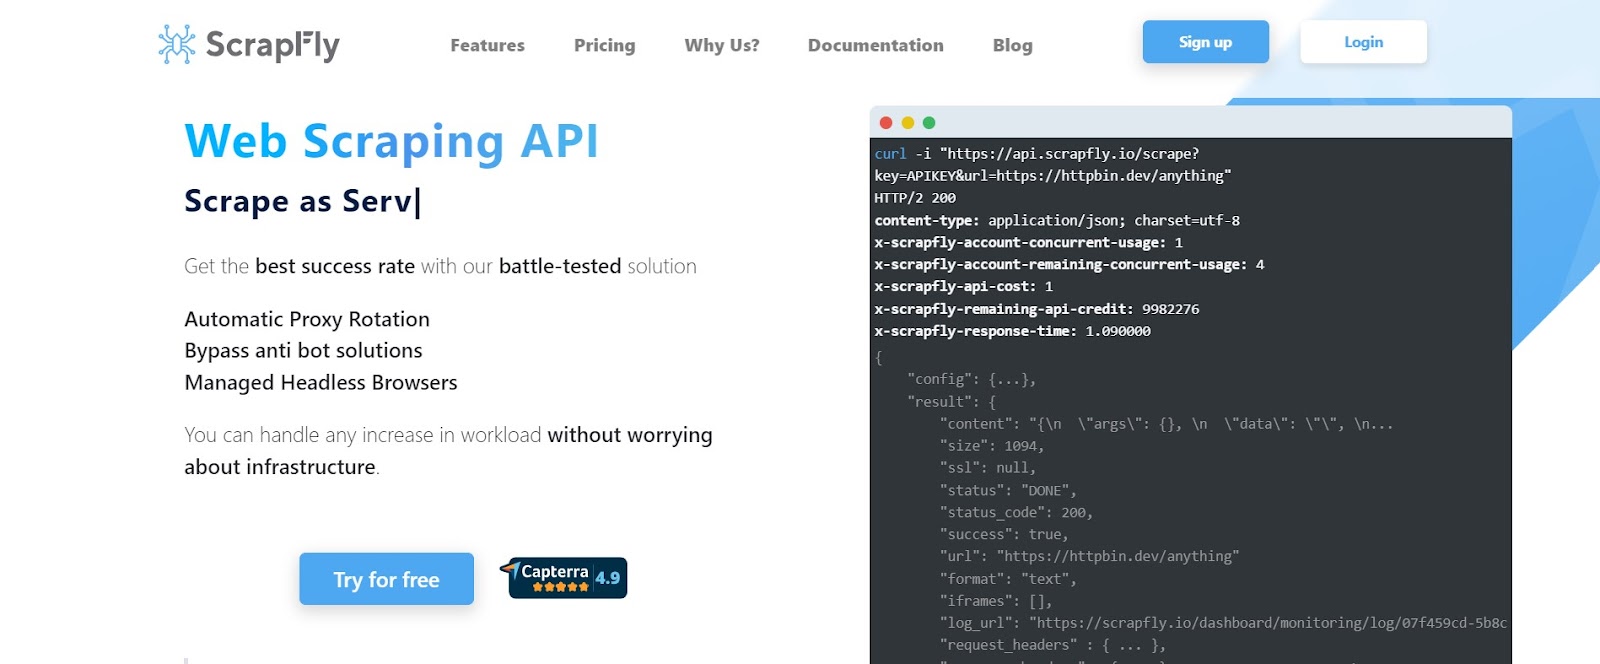 web scraping API ScrapFly